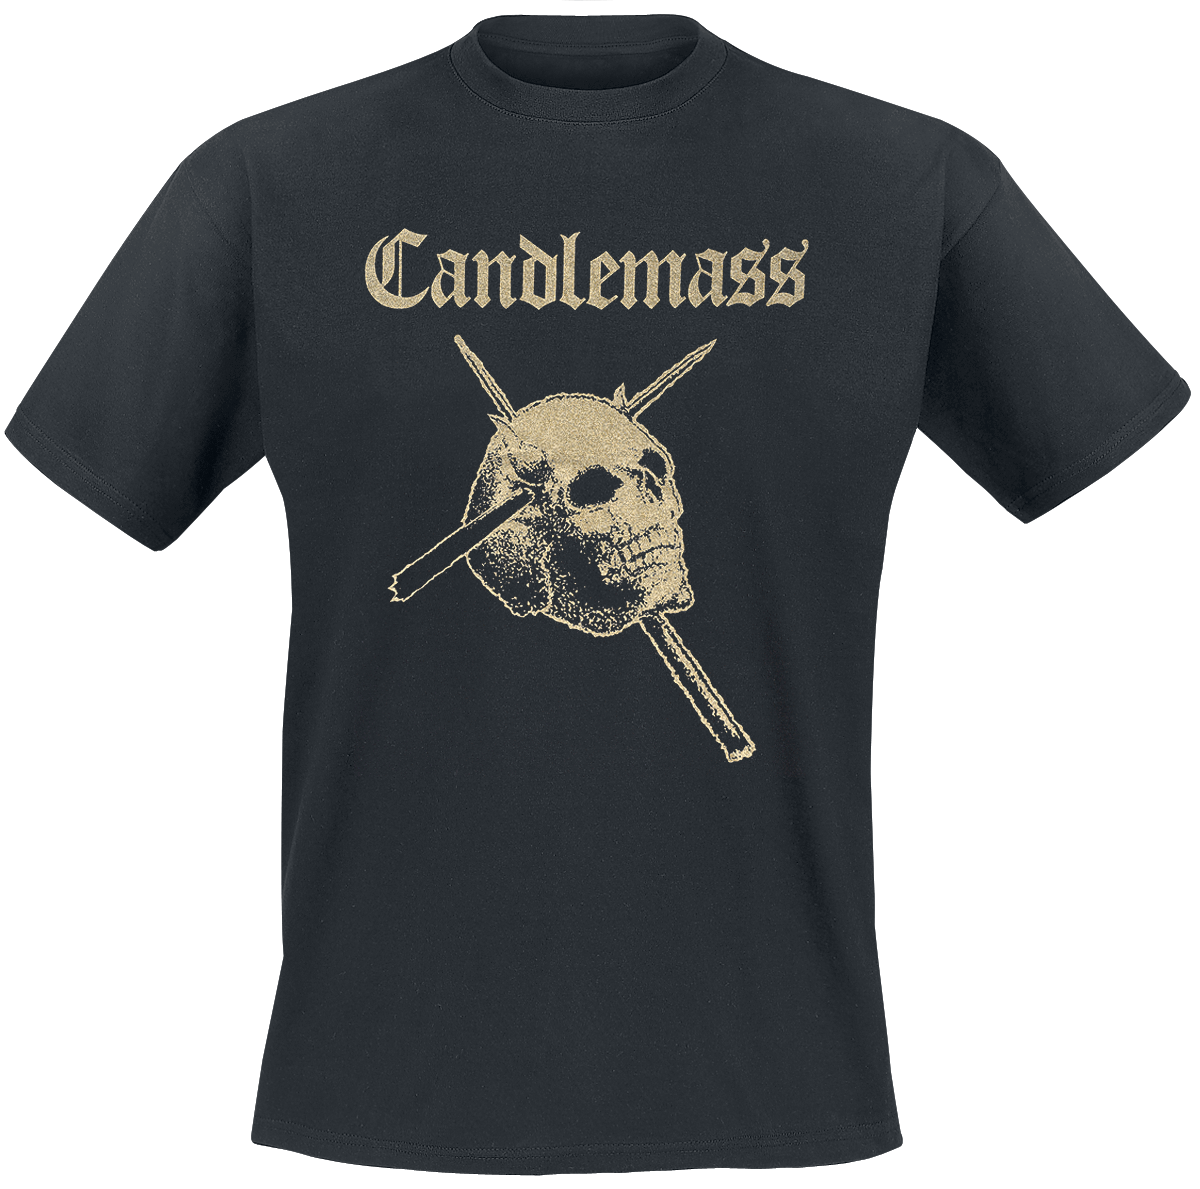 Candlemass - Gold Skull - T-Shirt - black image